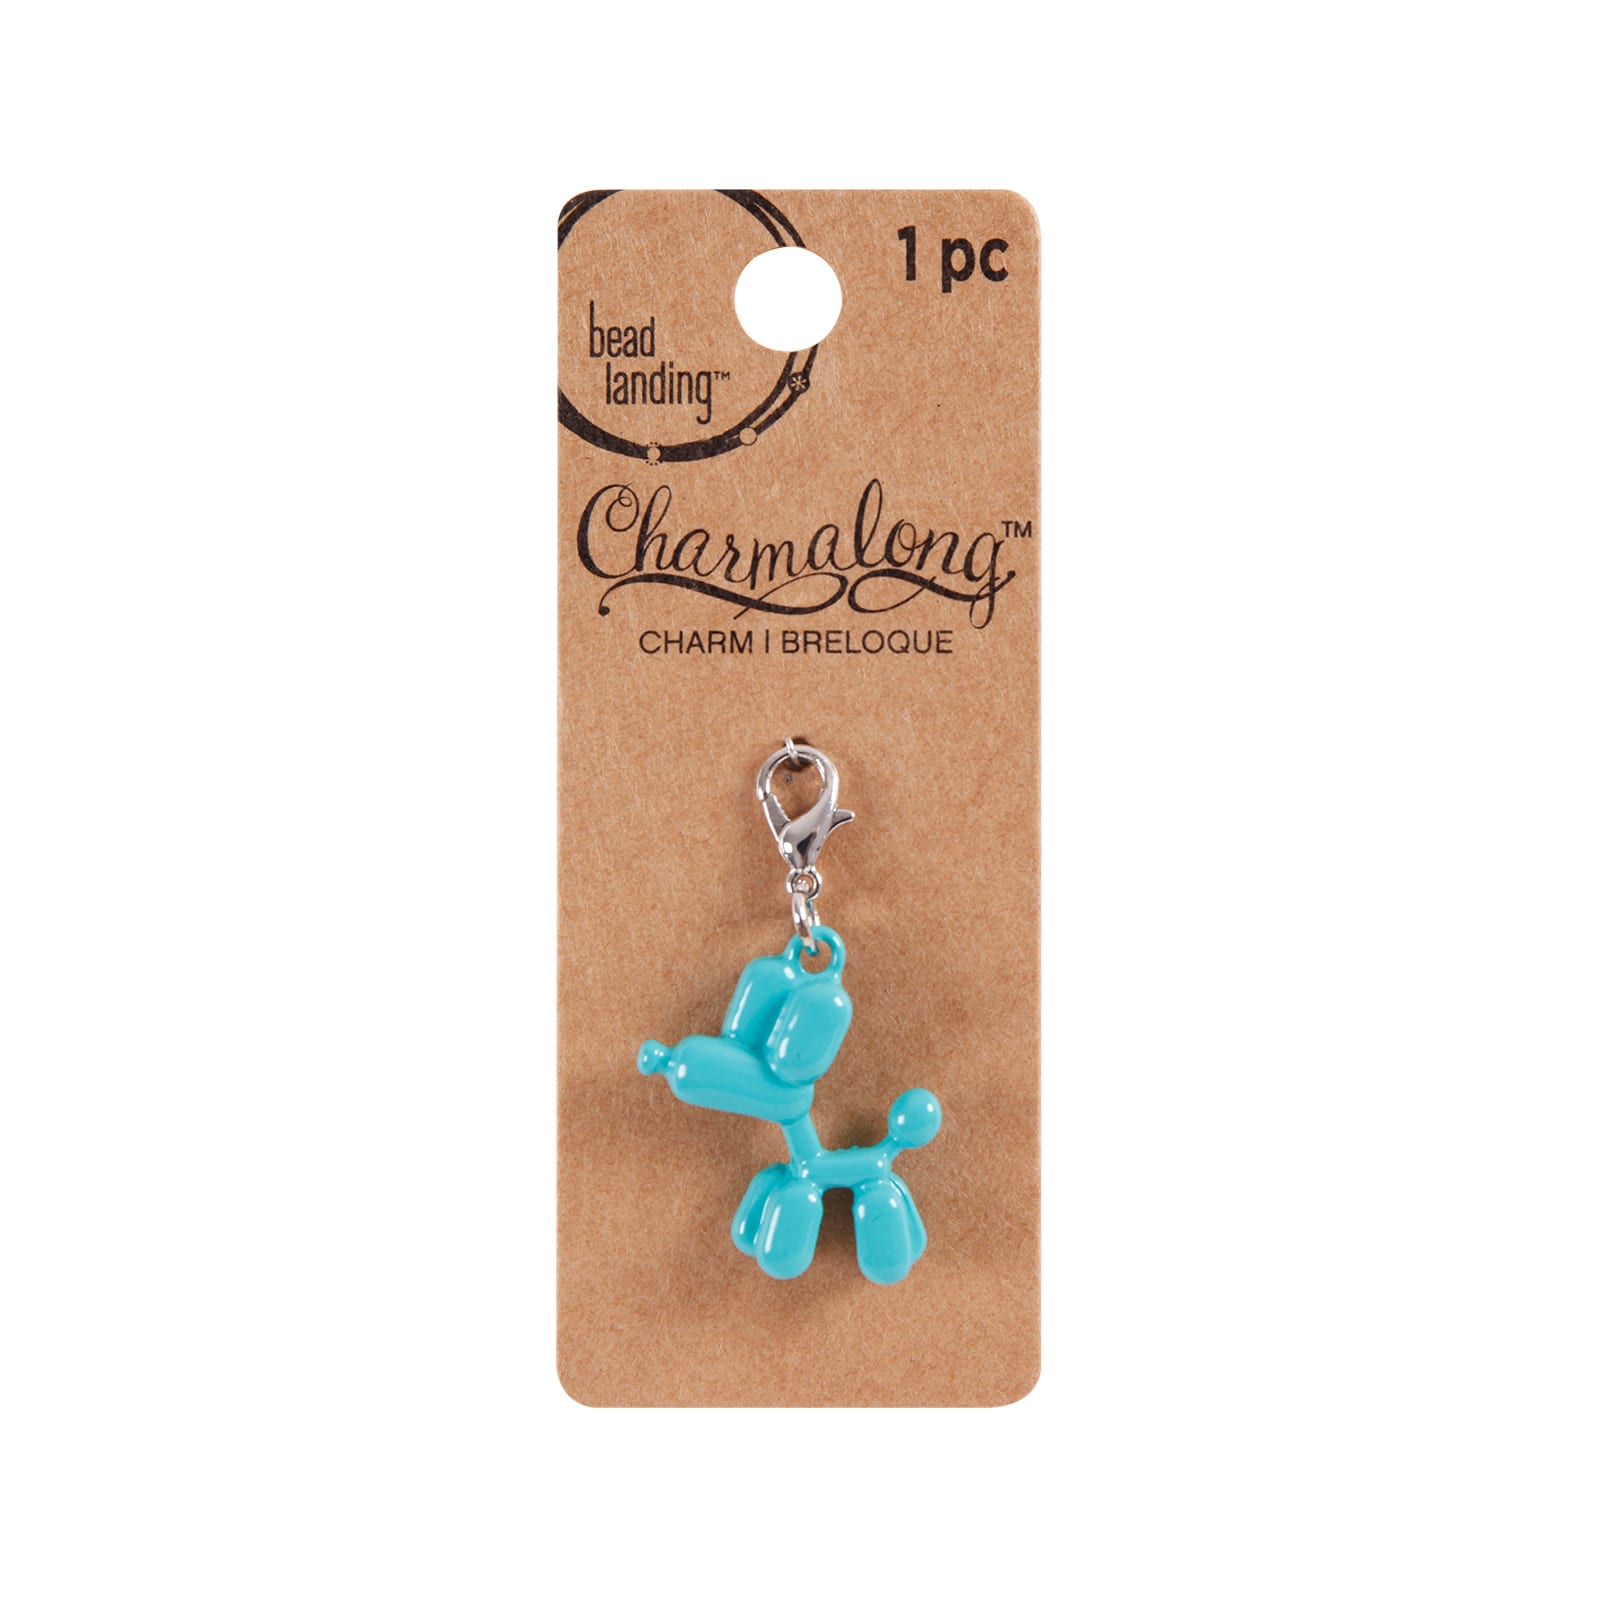 Charmalong&#x2122; Turquoise Balloon Dog Charm By Bead Landing&#x2122;